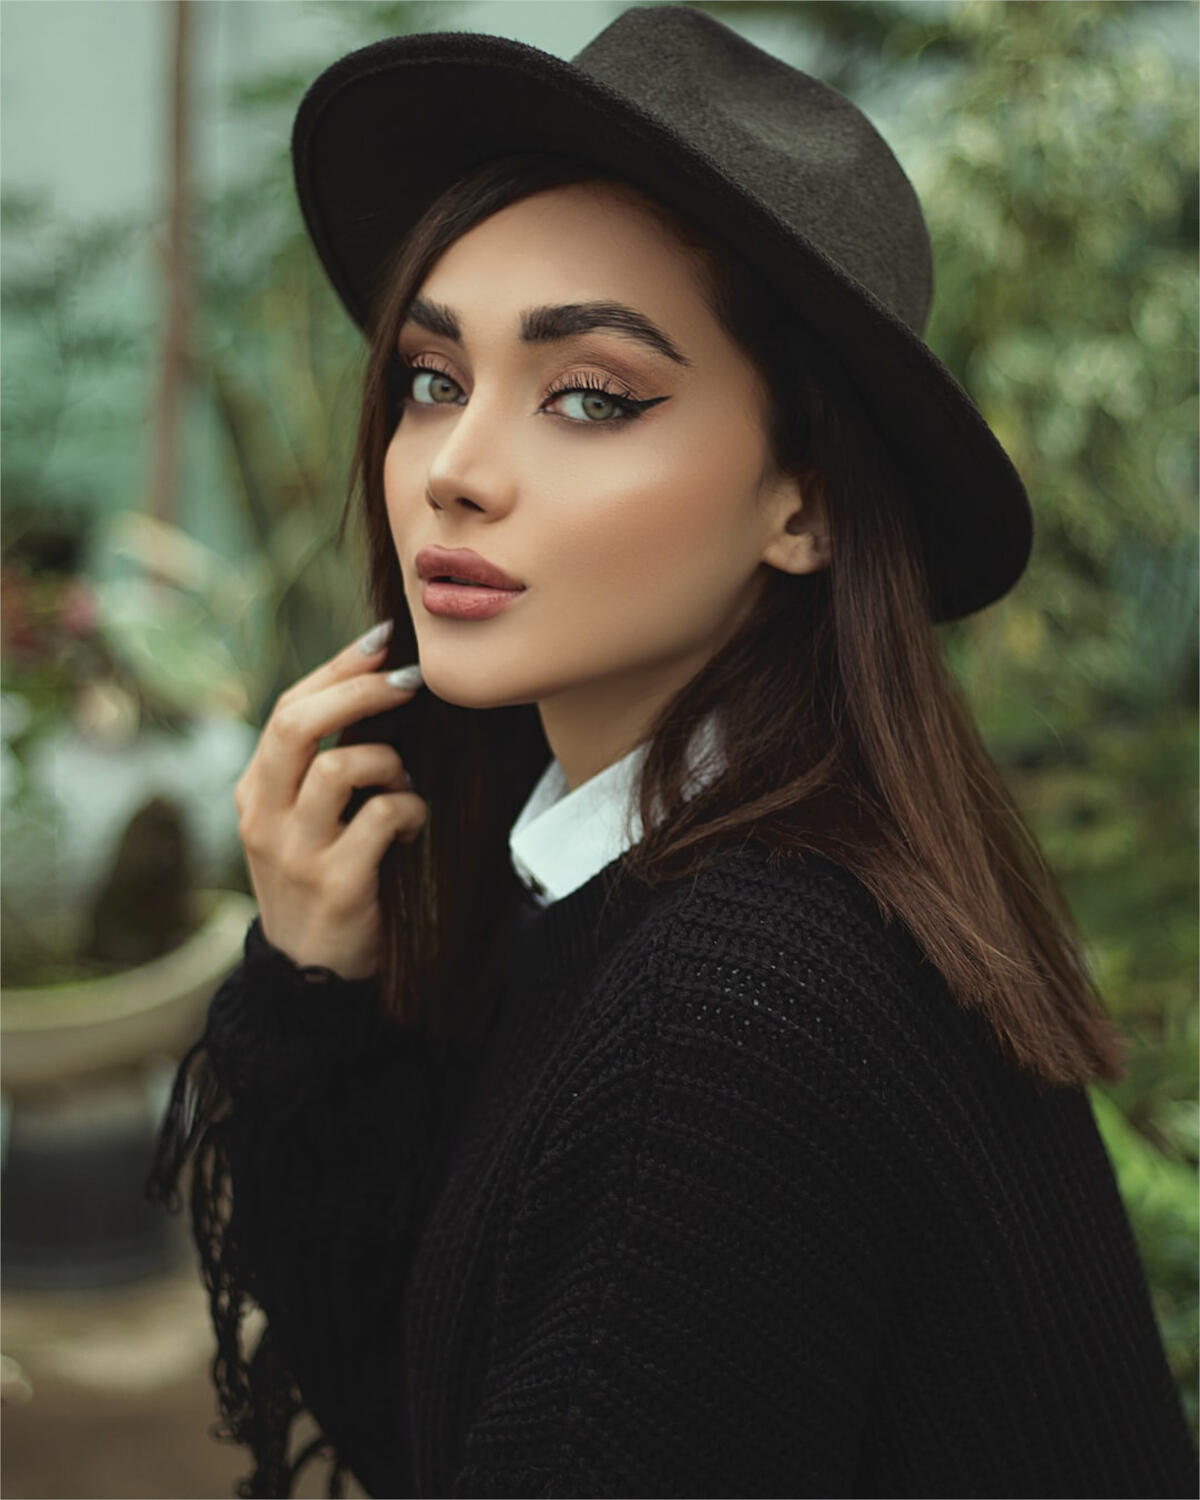 Beautiful brunette in a black hat